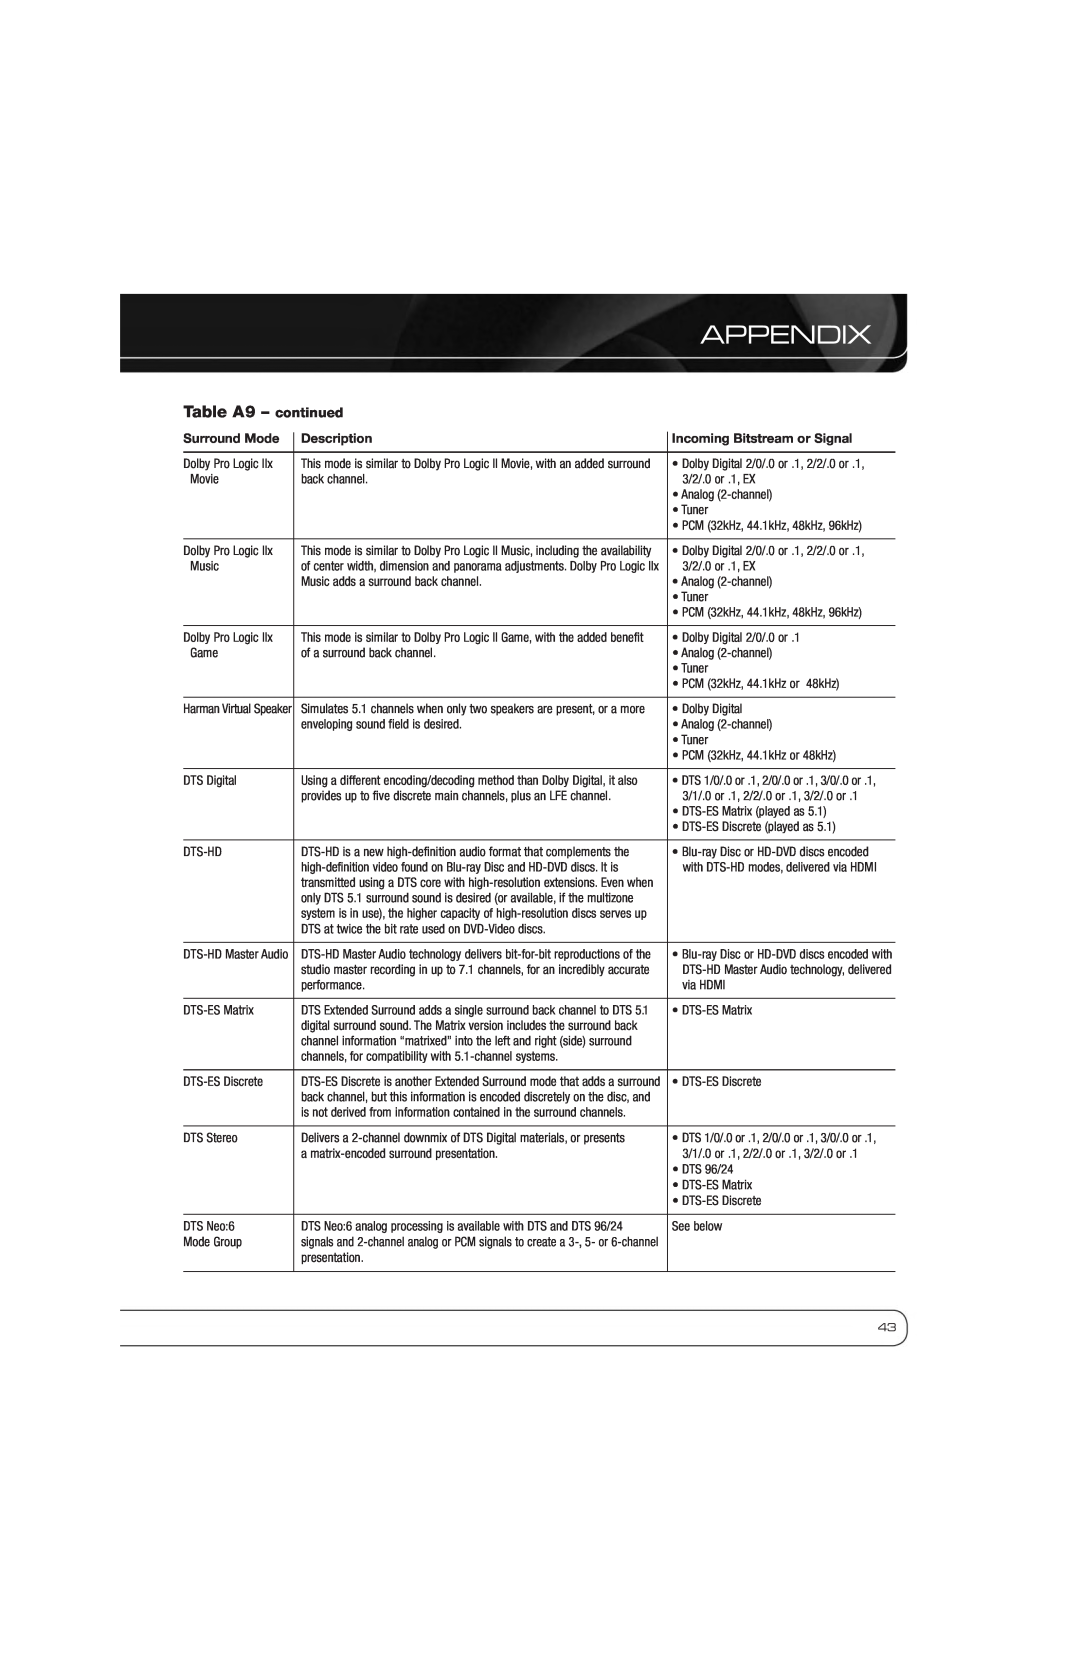 Harman-Kardon AVR 1600 Table A9 - continued, Appendix, Surround Mode, Description, Incoming Bitstream or Signal 